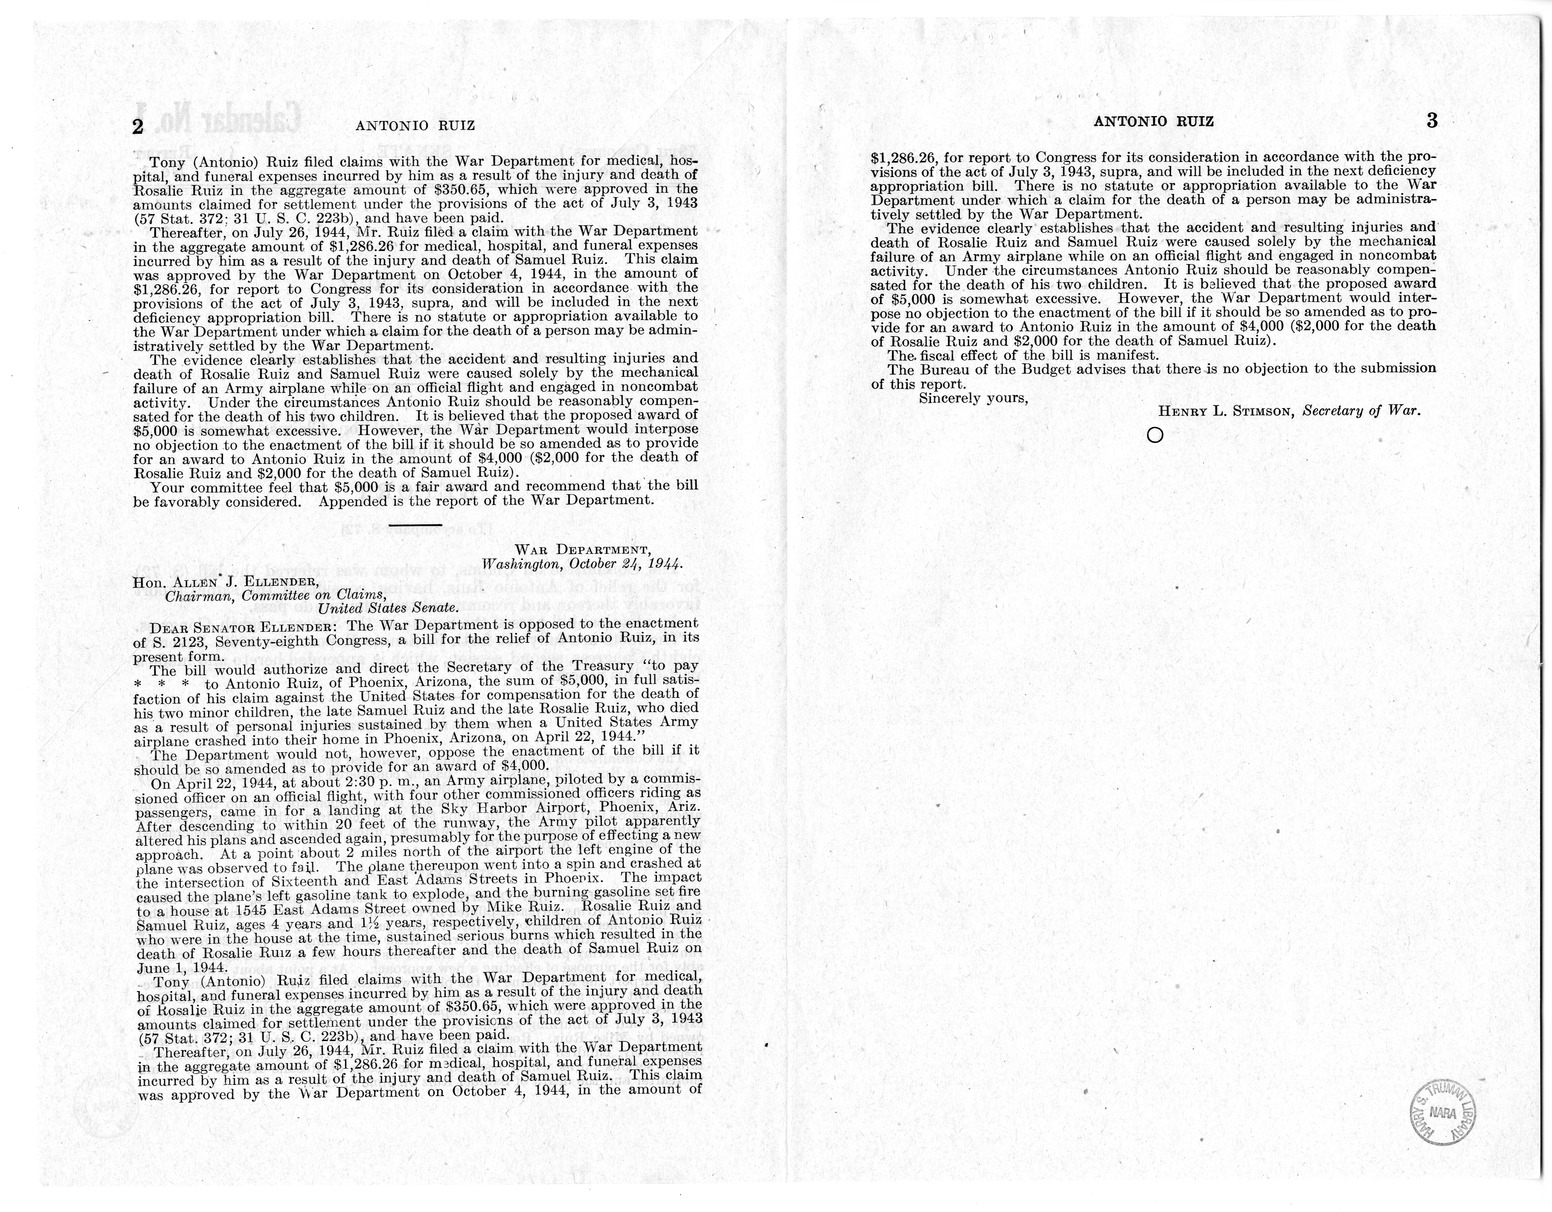 Memorandum from Frederick J. Bailey to M. C. Latta, S. 72, for the Relief of Antonio Ruiz, with Attachments